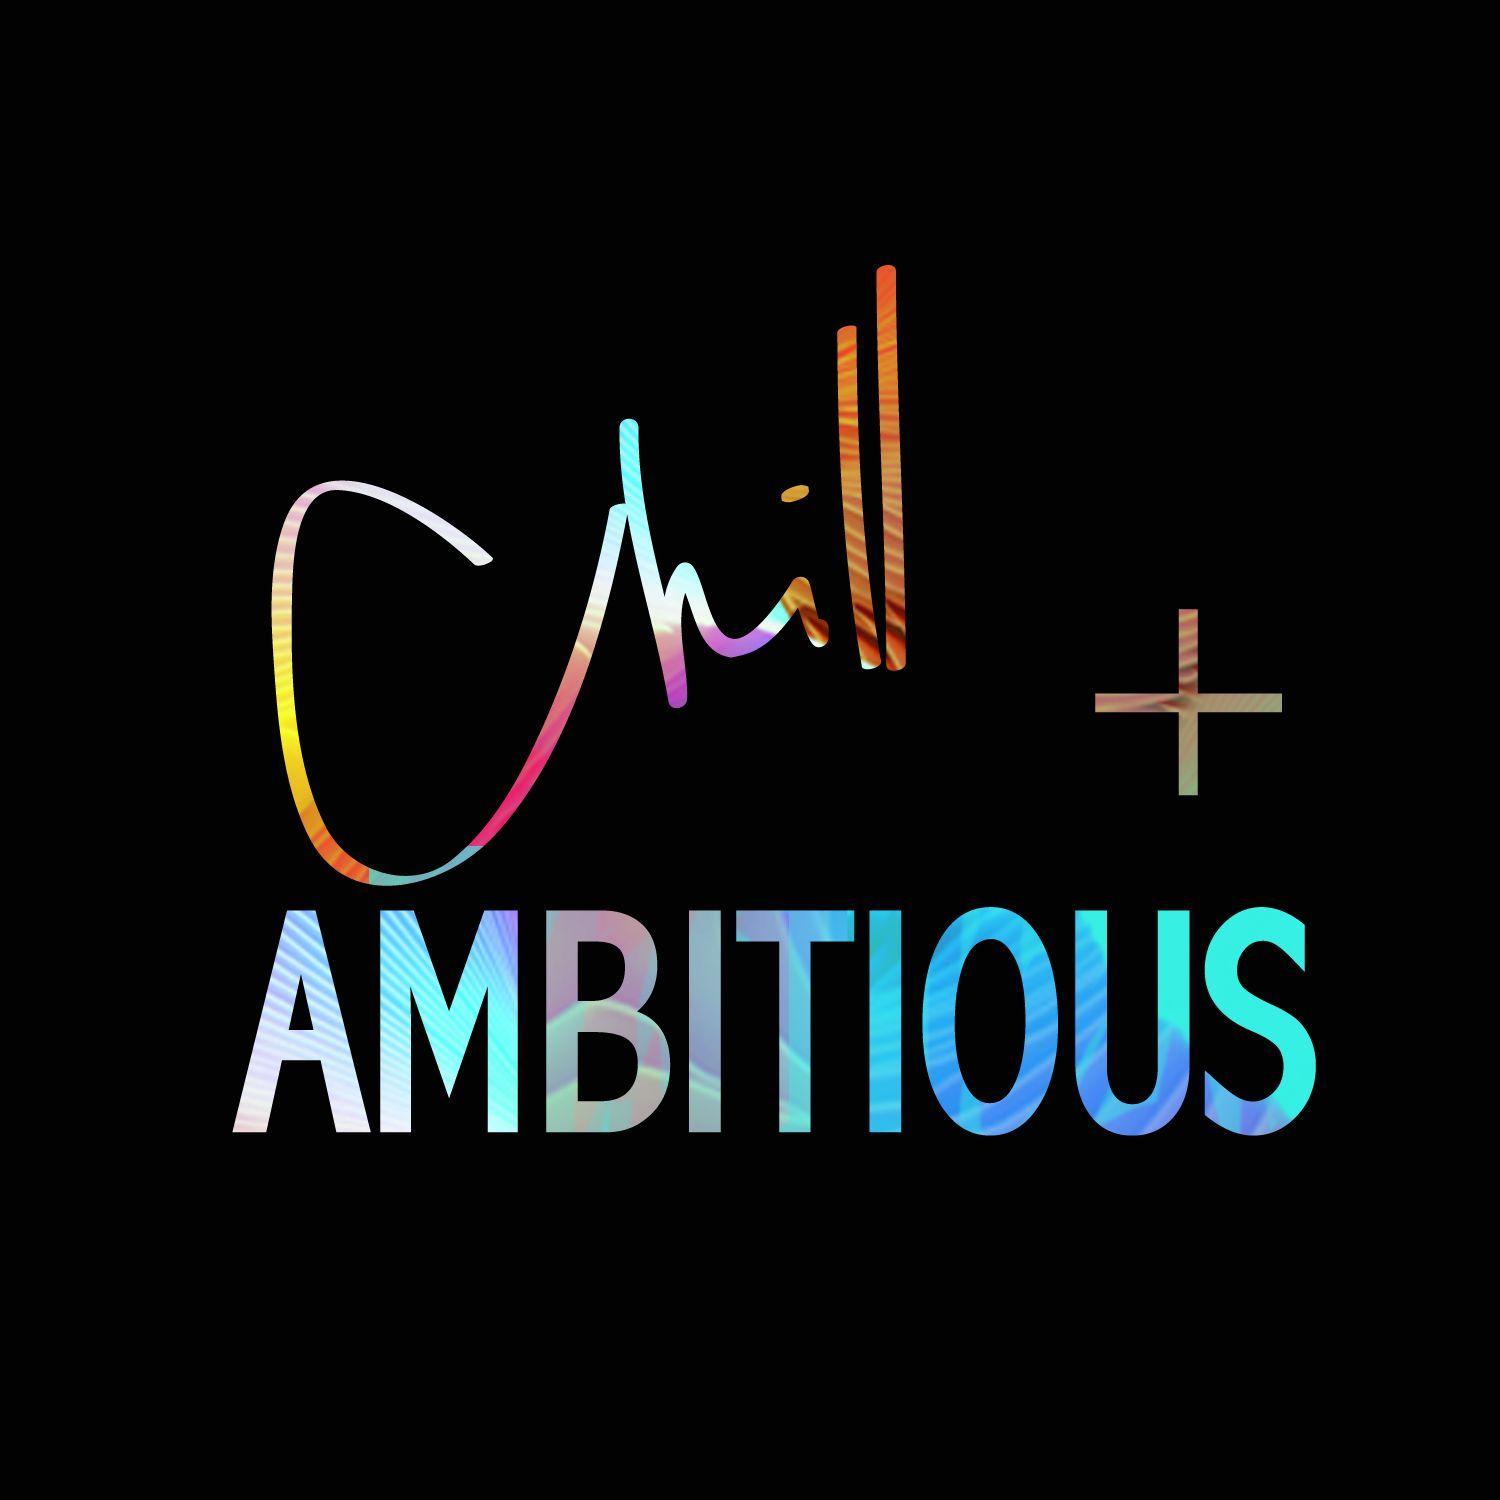 Ambitious Logo - pod. fanatic. Podcast: Chill + Ambitious